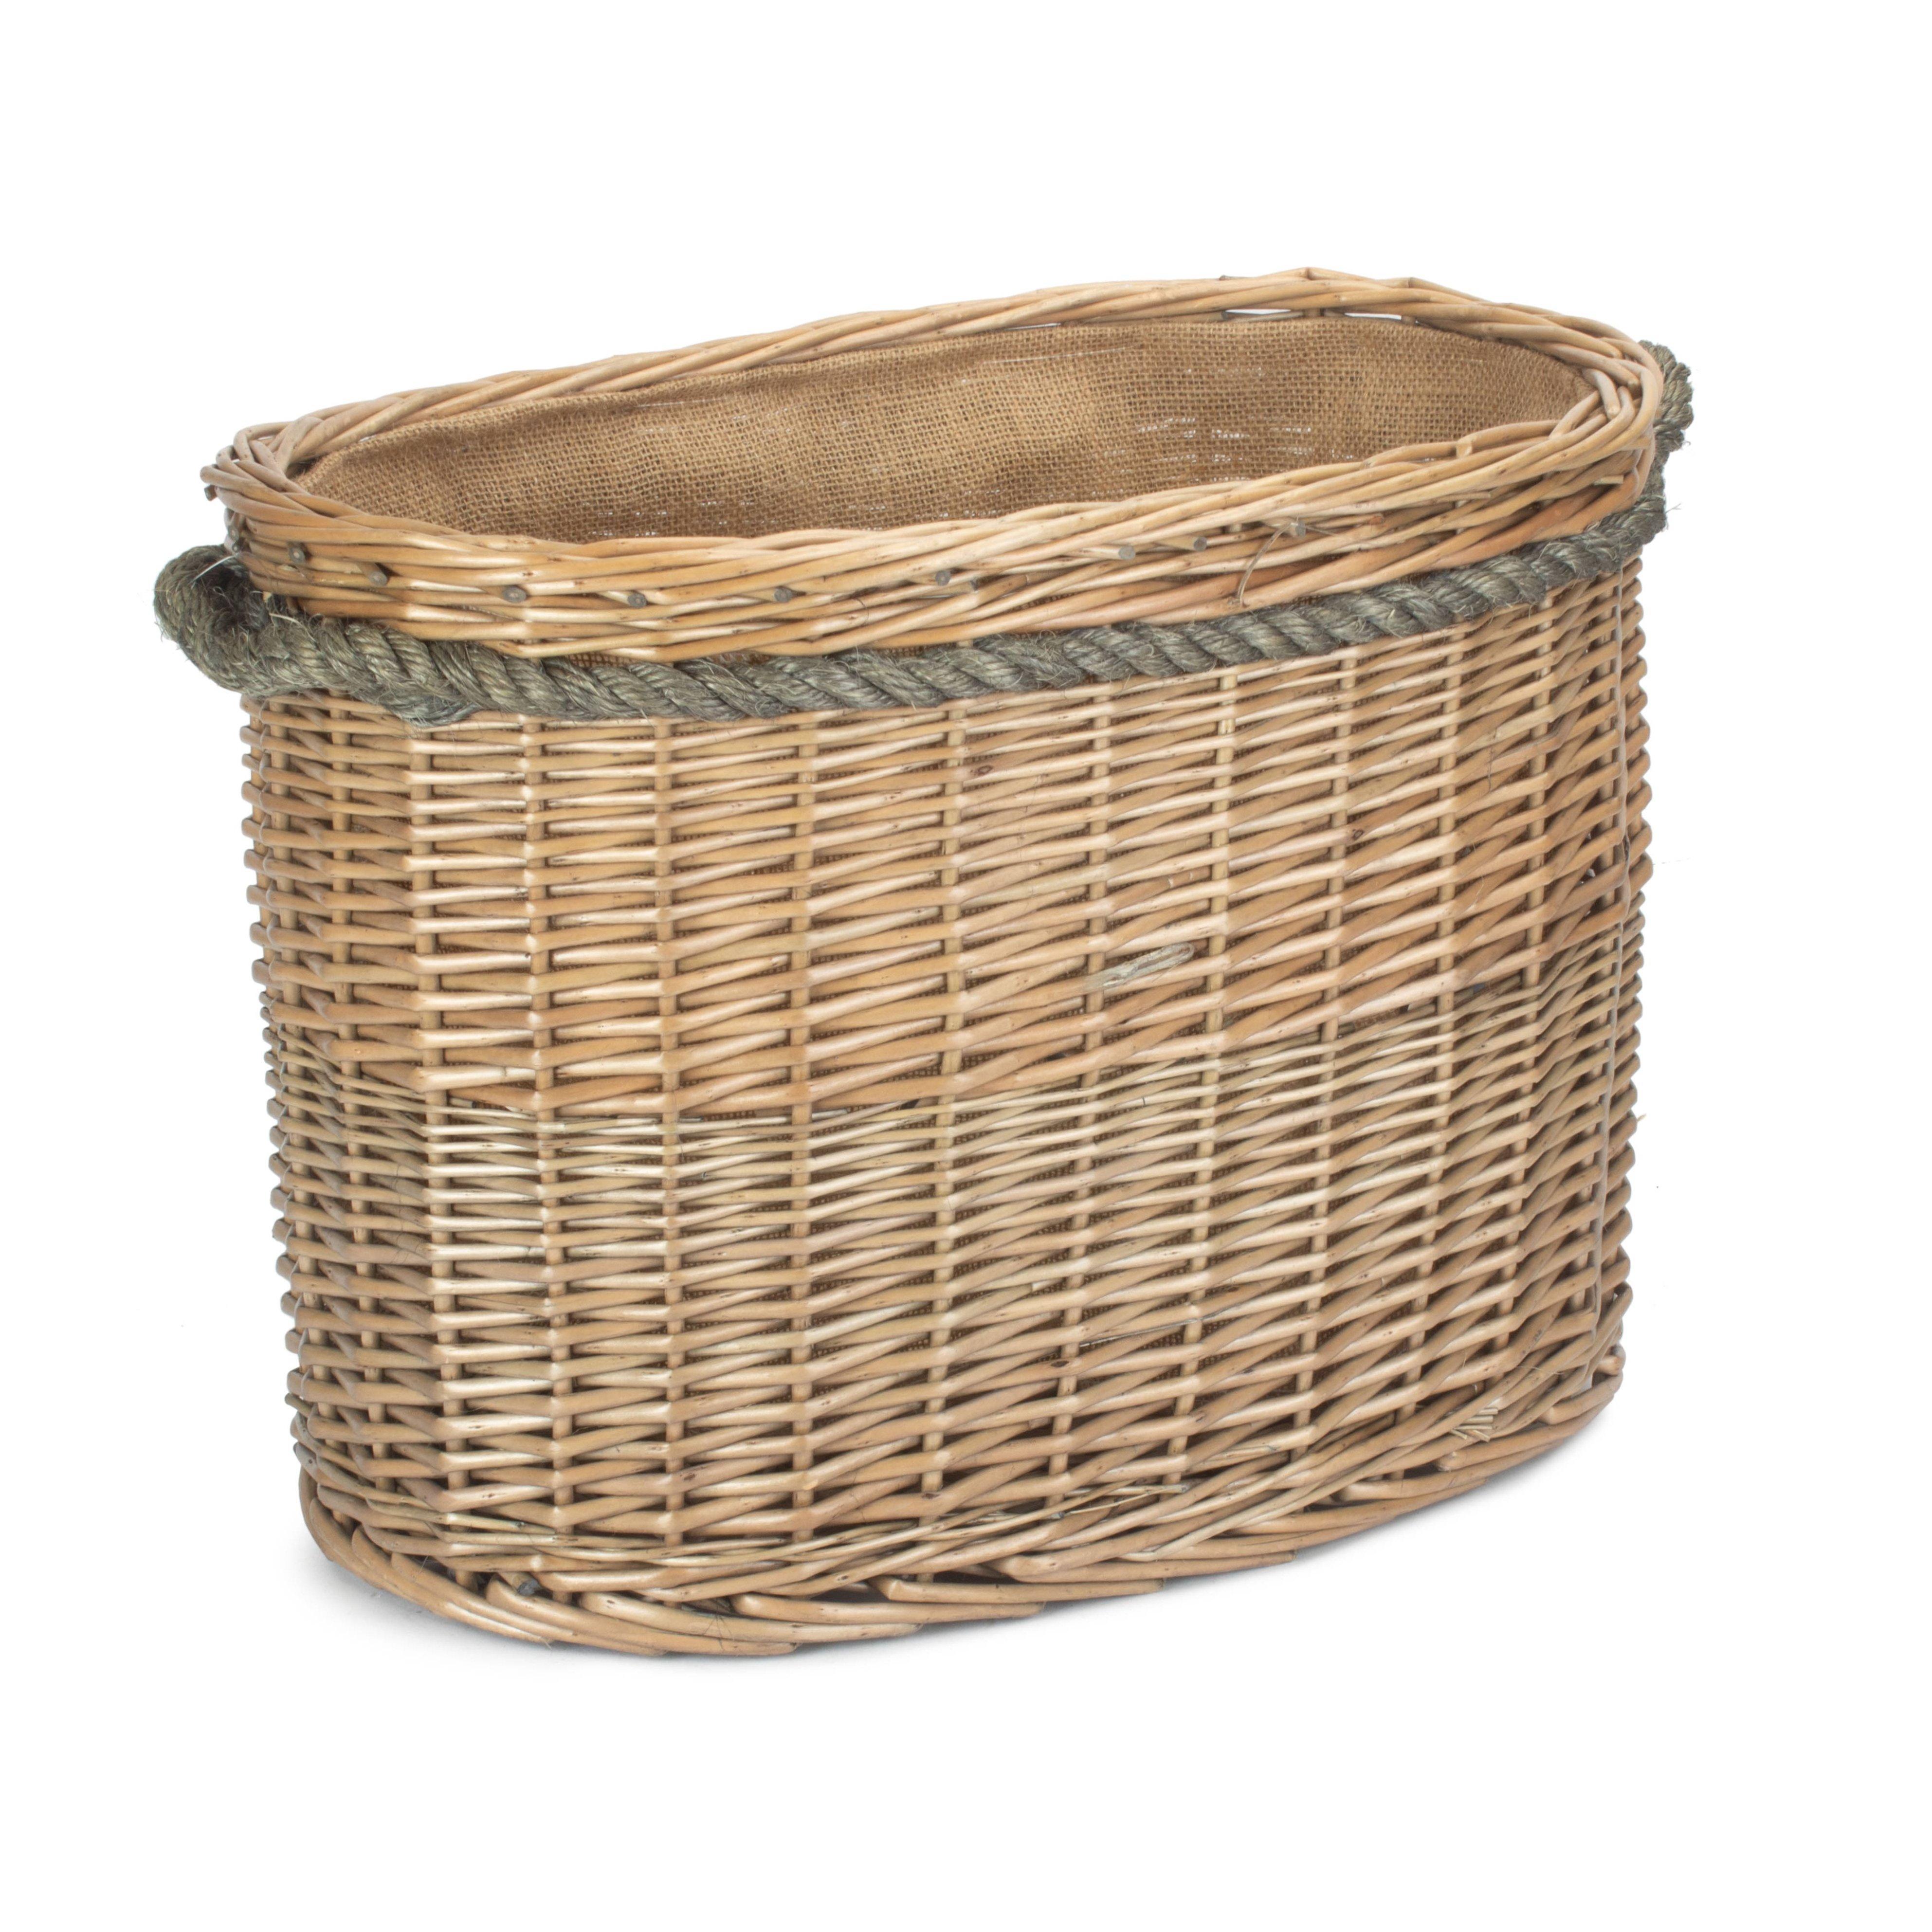 Wicker Oval Rope Handled Log Basket